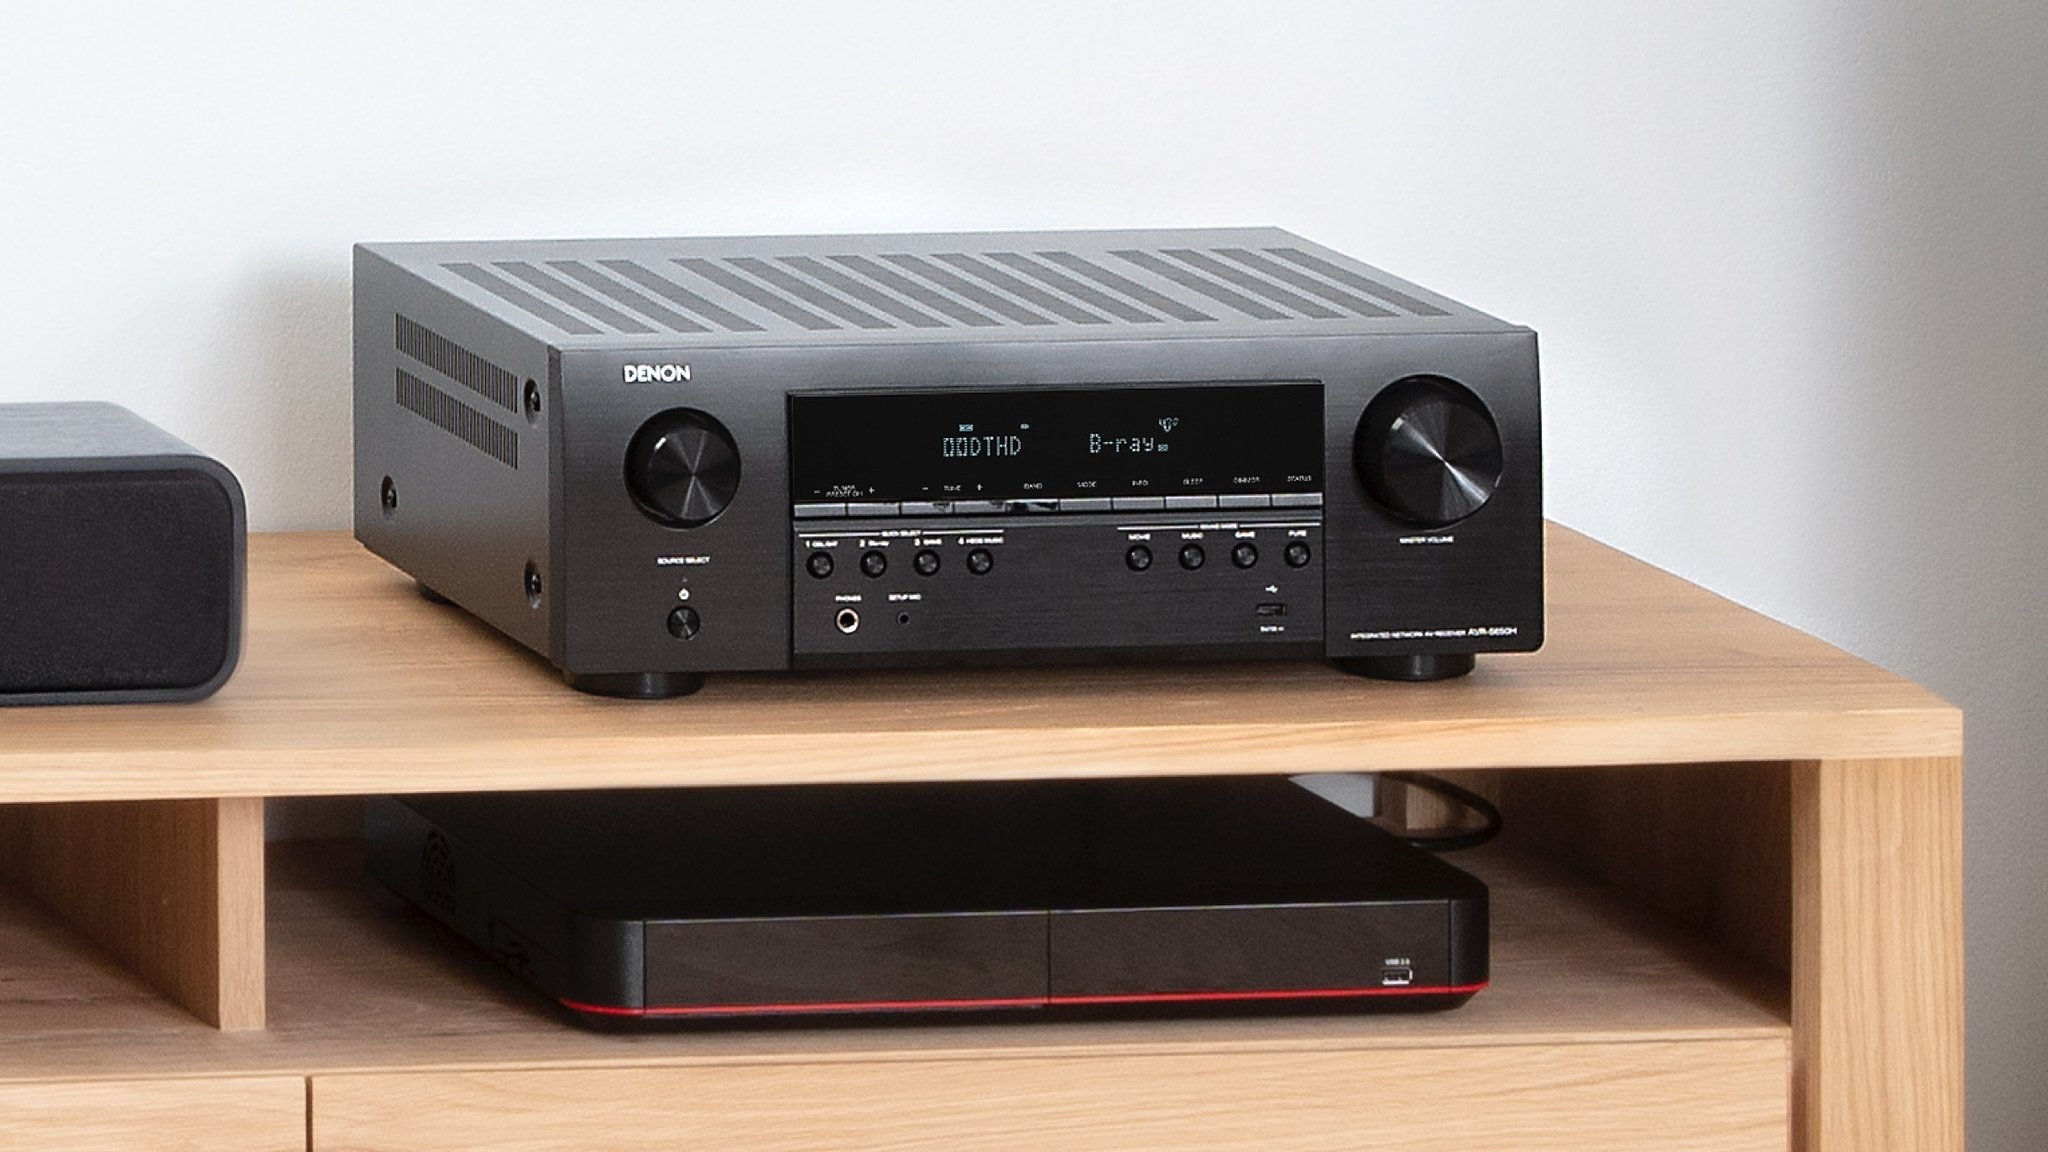 Denon Avr S650h Audio Video Receiver on an entertainment center